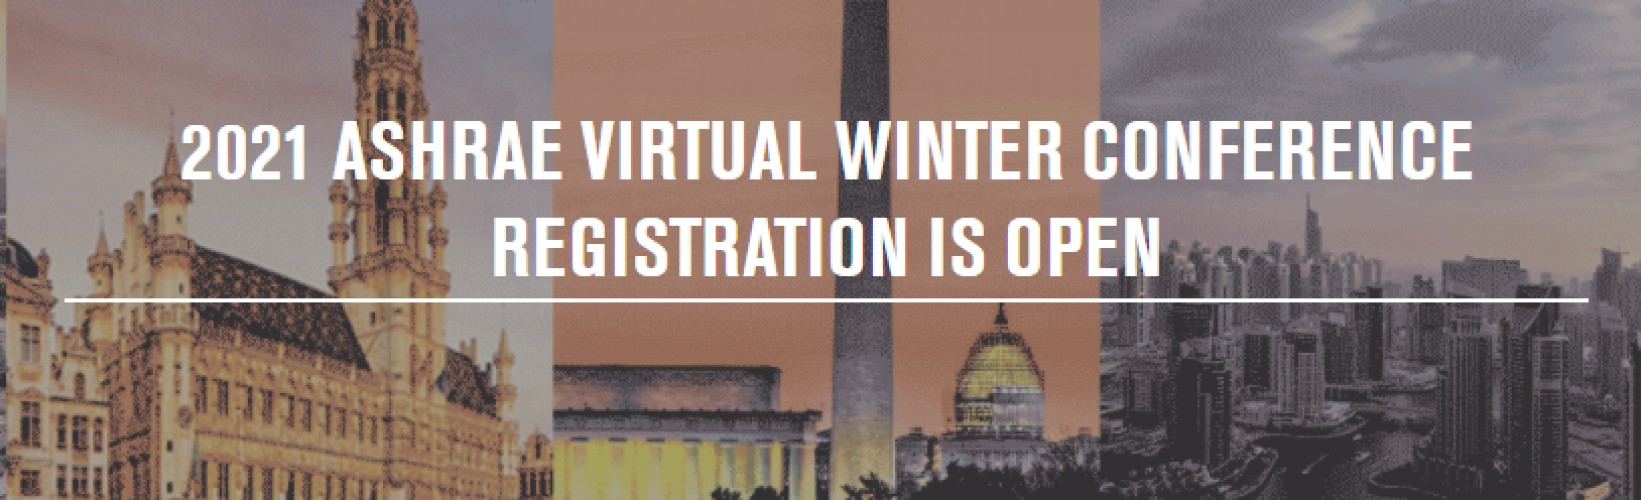 2021-ashrae-virtual-winter-conference-registration-is-open